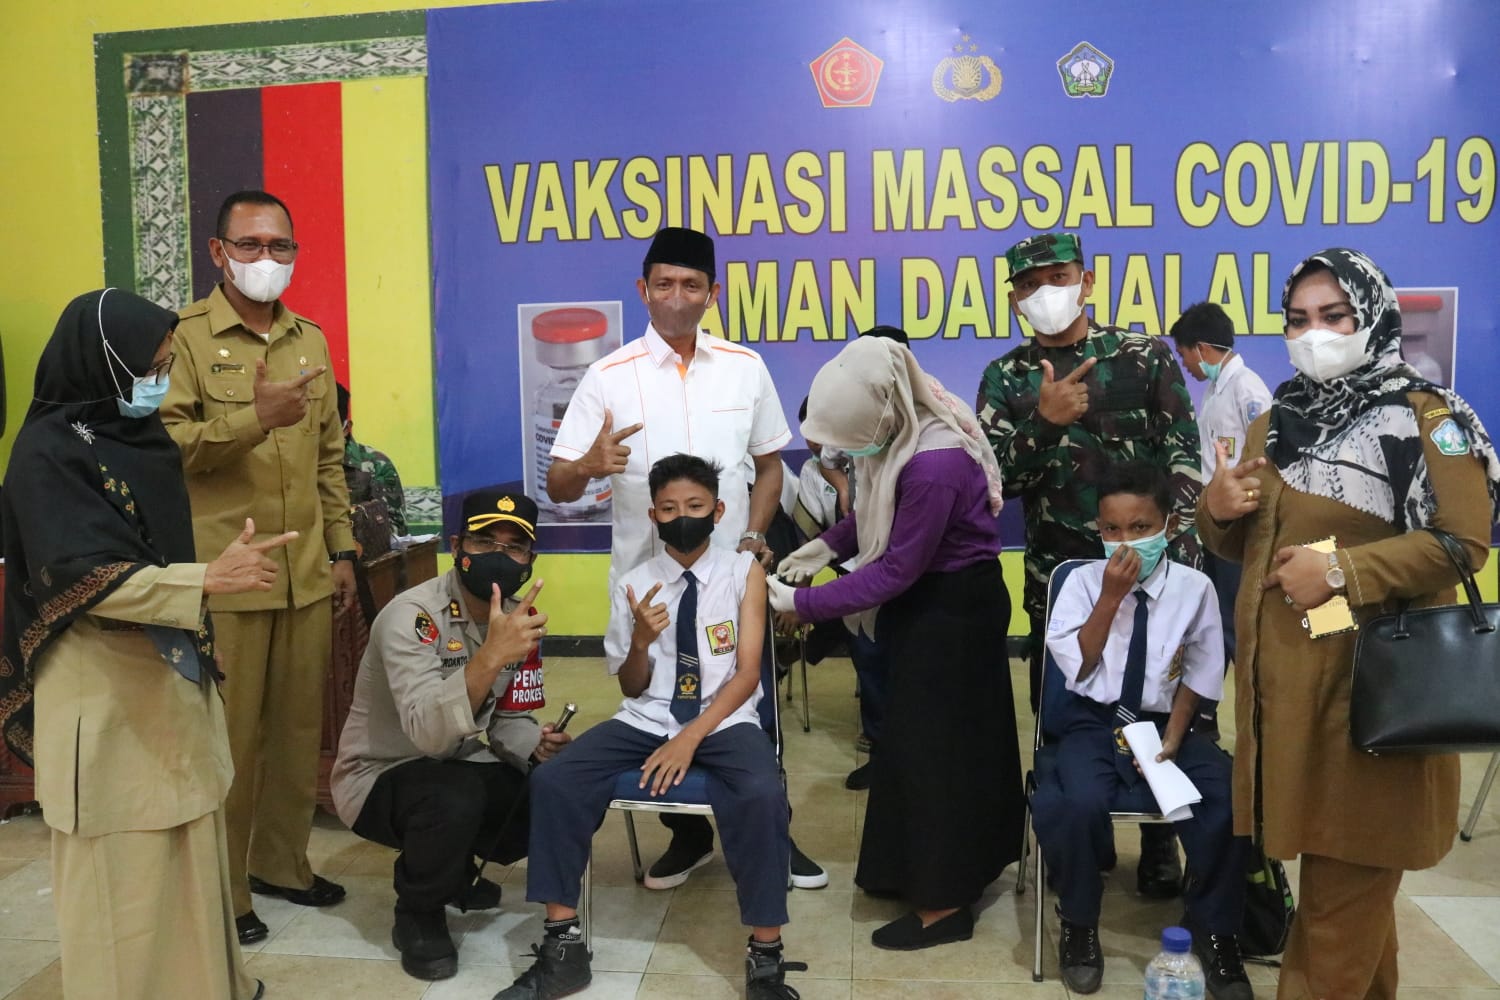 Antusias Masyarakat Semakin Tinggi Aceh Selatan Kembali Gelar Vaksinasi Massal